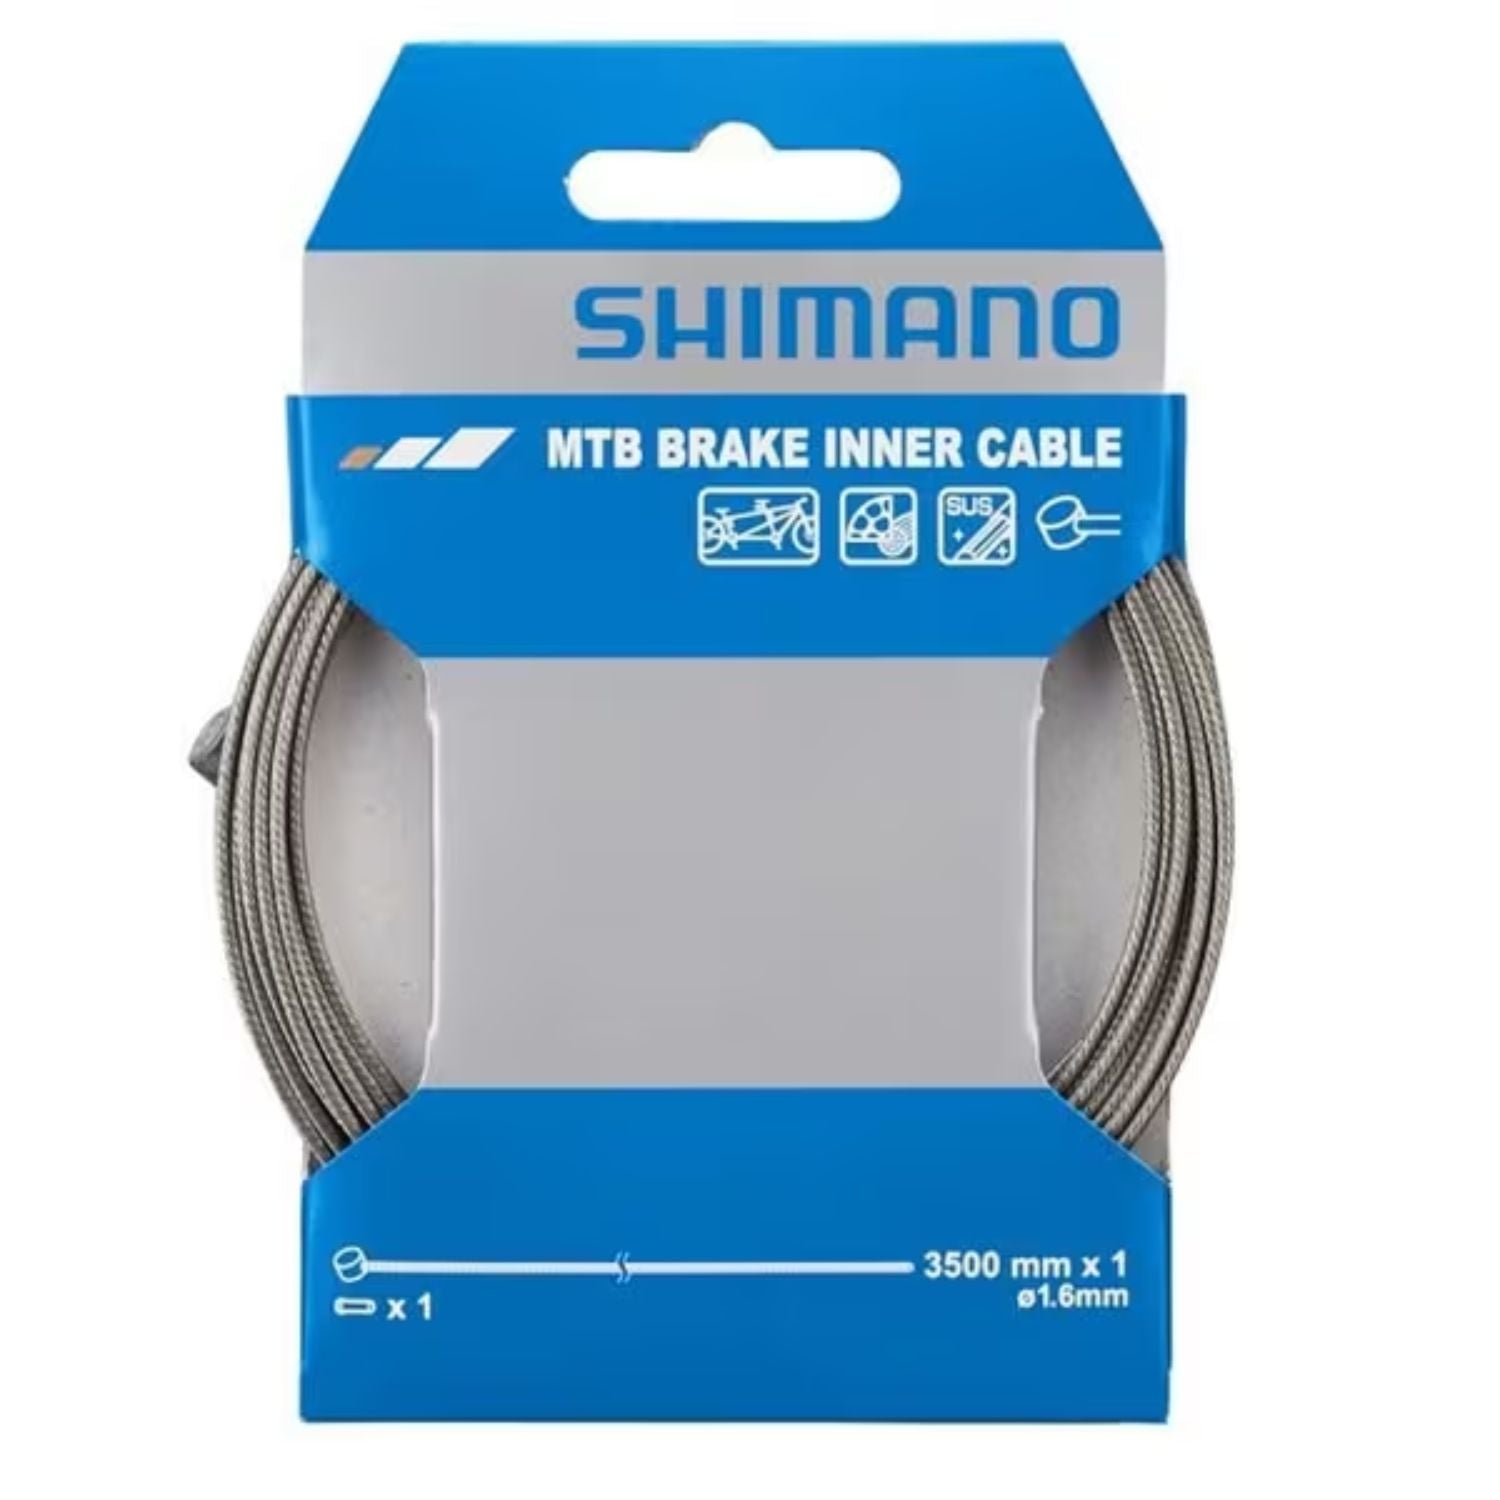 SHIMANO MTB brake inner cable